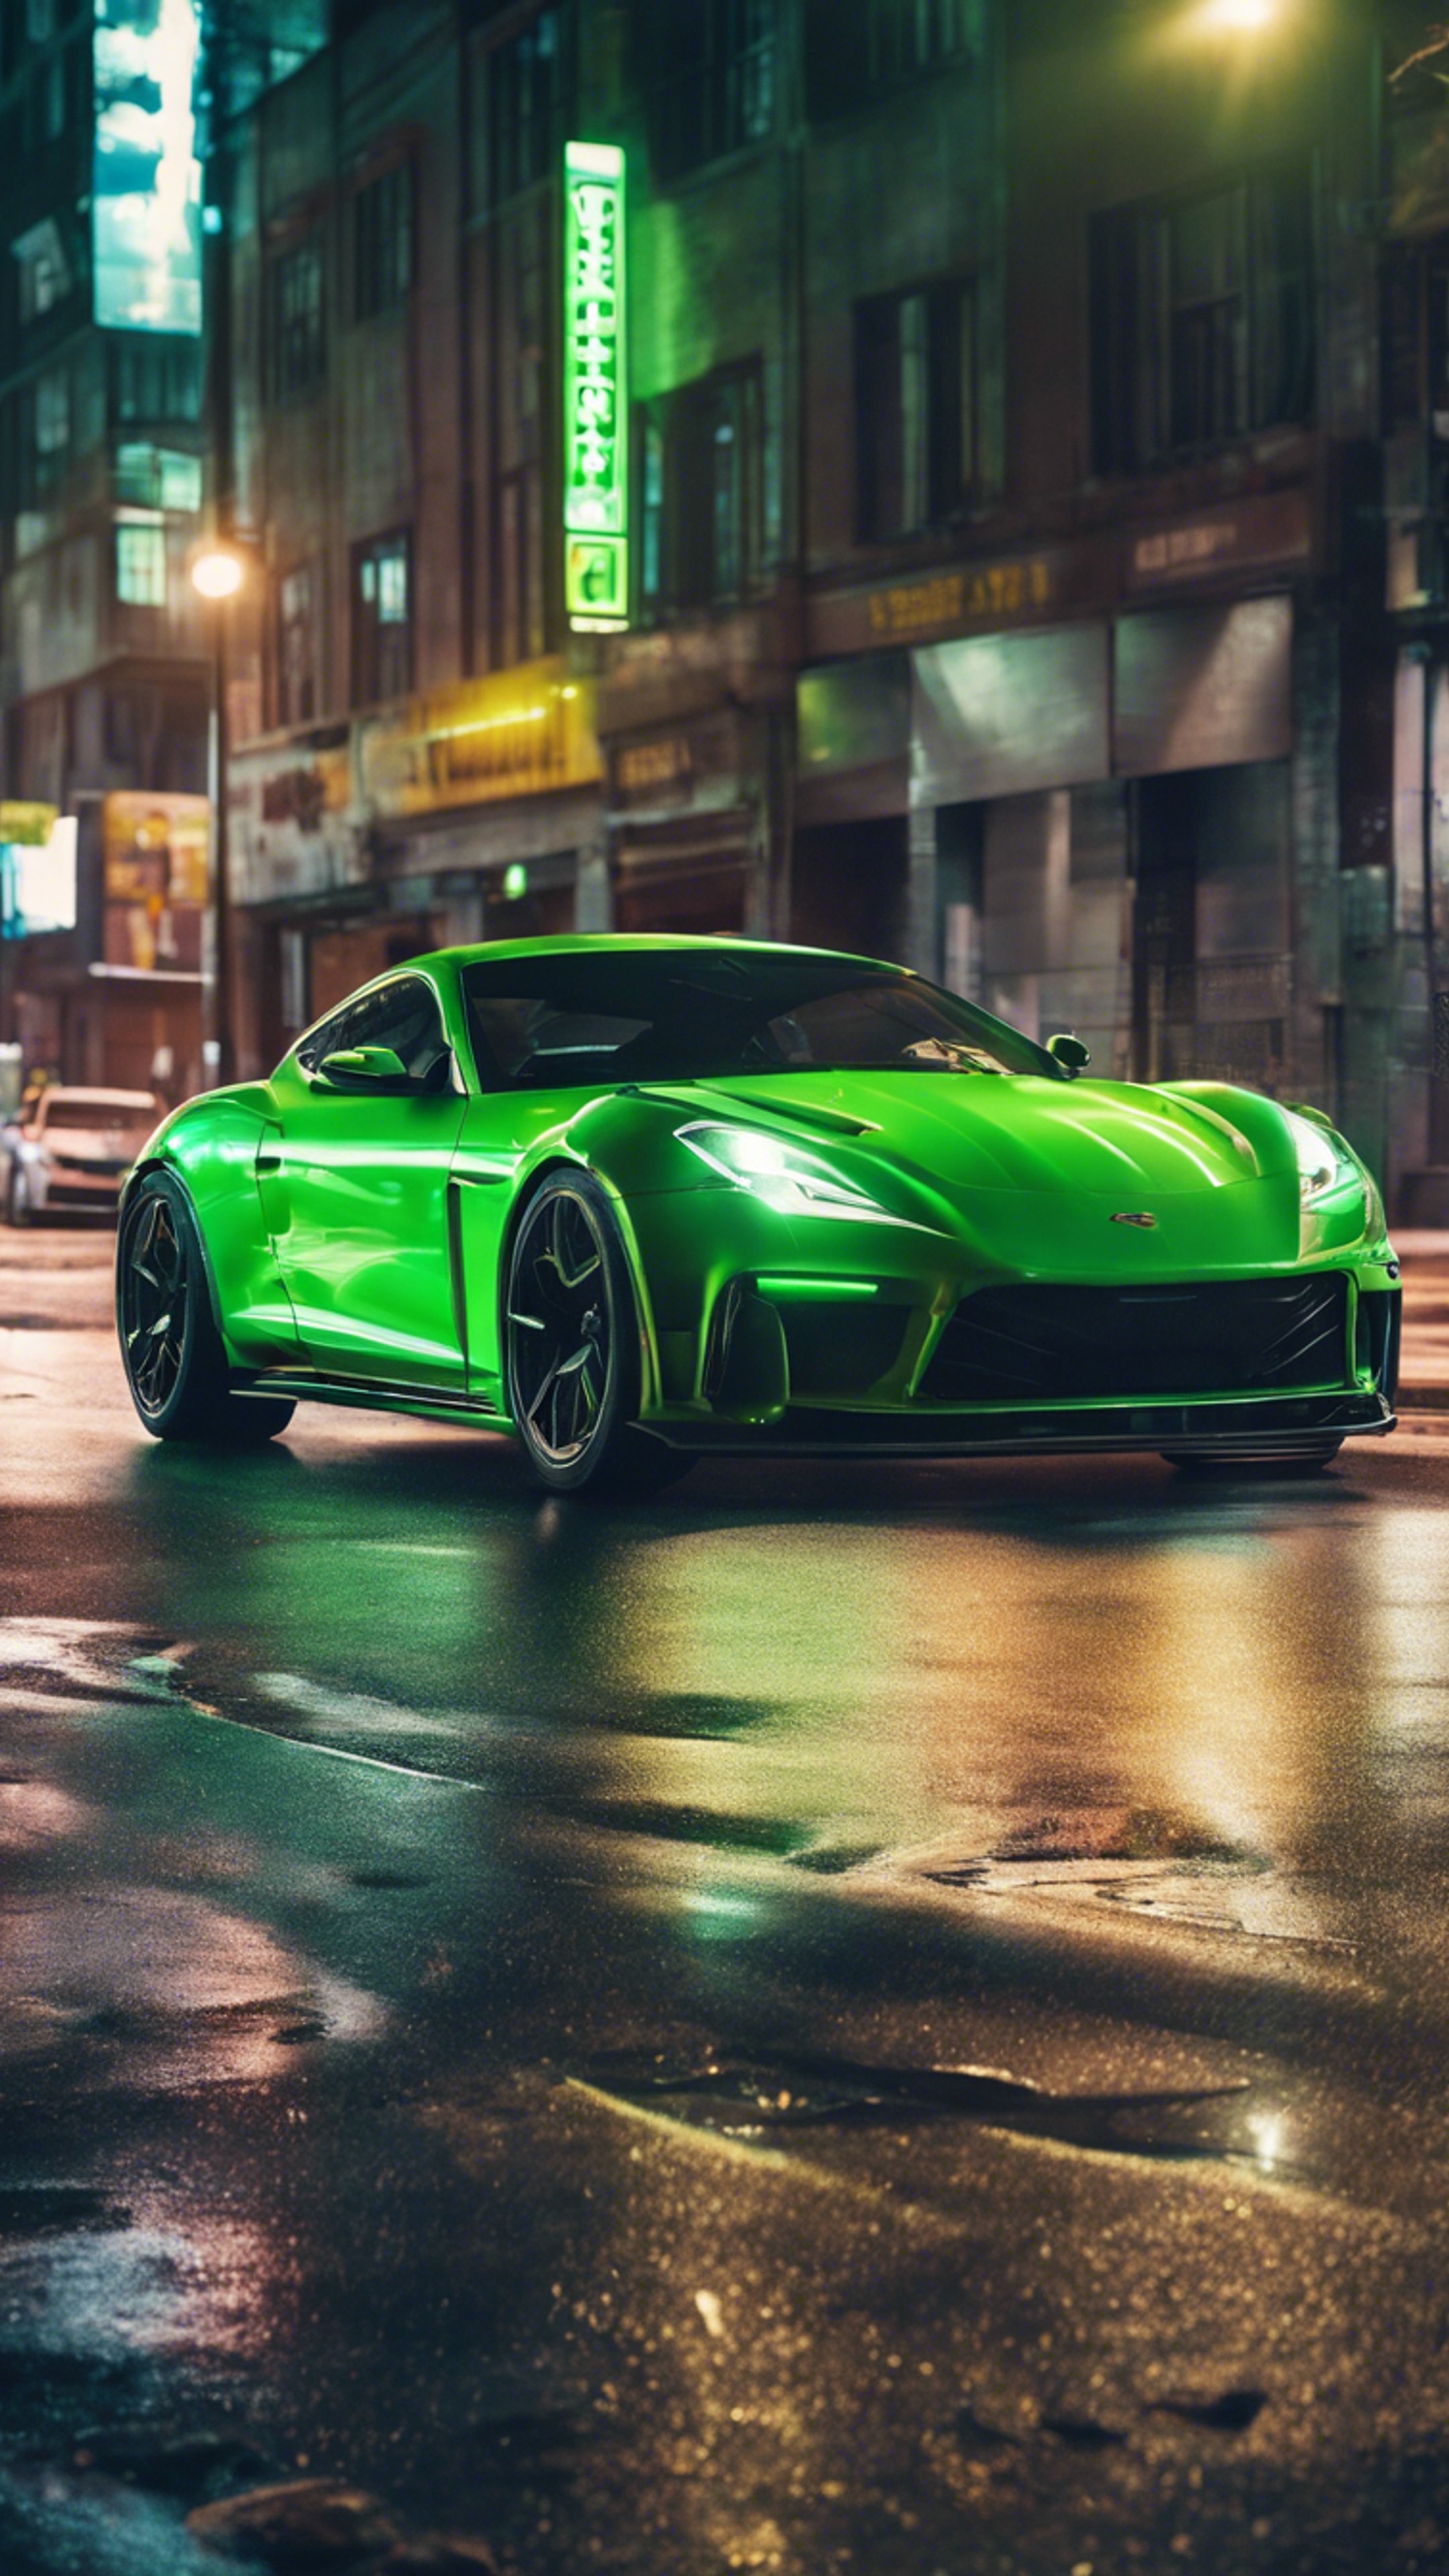 A cool neon green sports car racing down a city street at night. Taustakuva[ff2aa681813144c0b5f6]